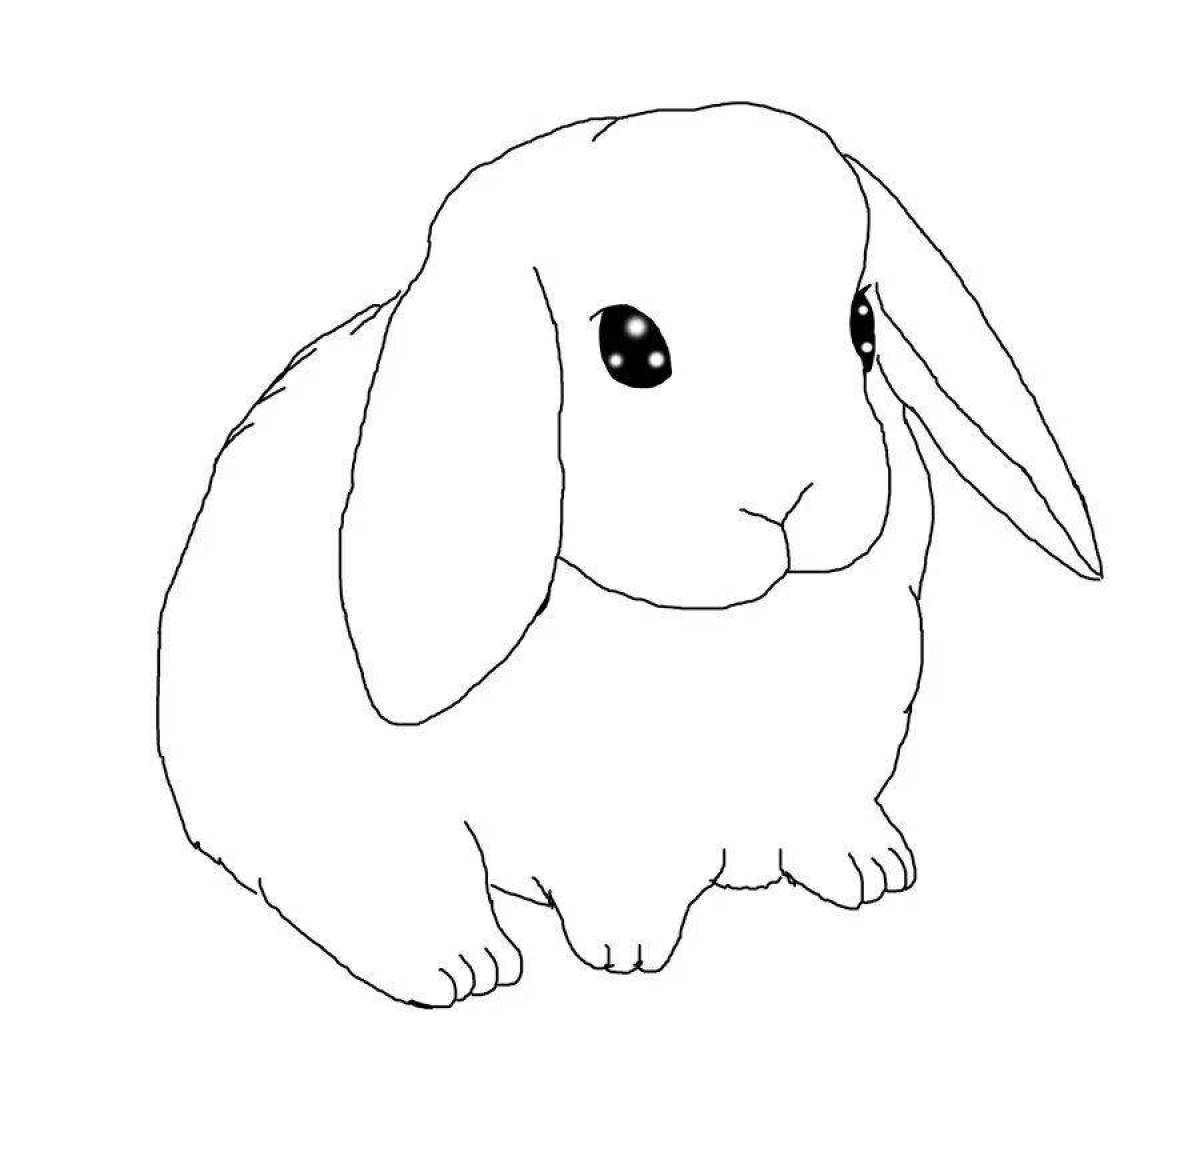 Fancy coloring rabbit image